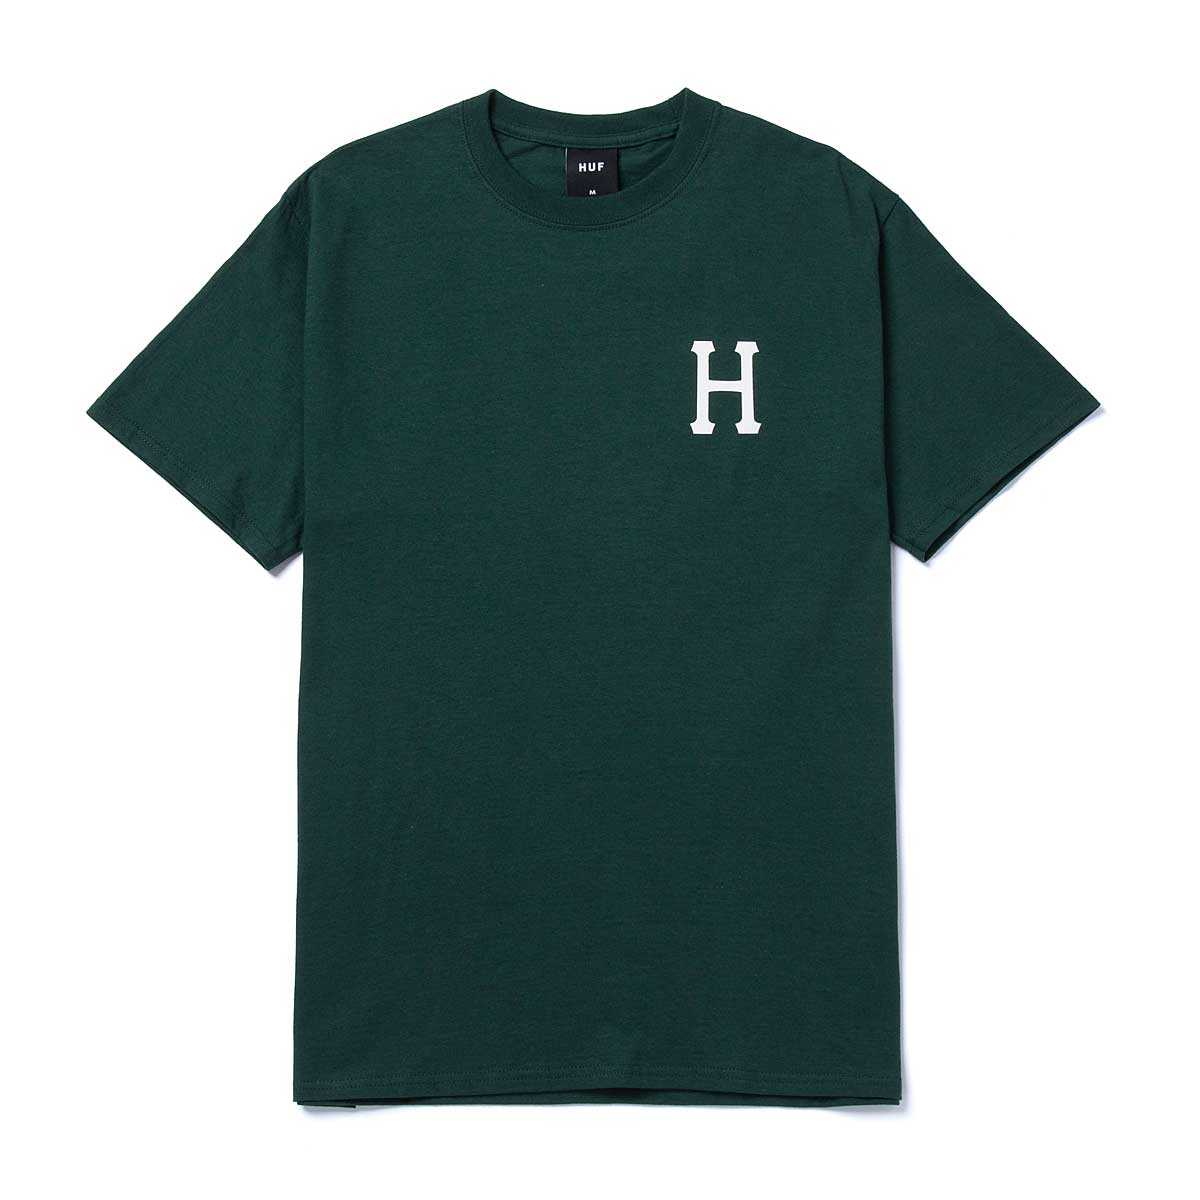 Huf Essentials Classic H T-Shirt, Dkgrn